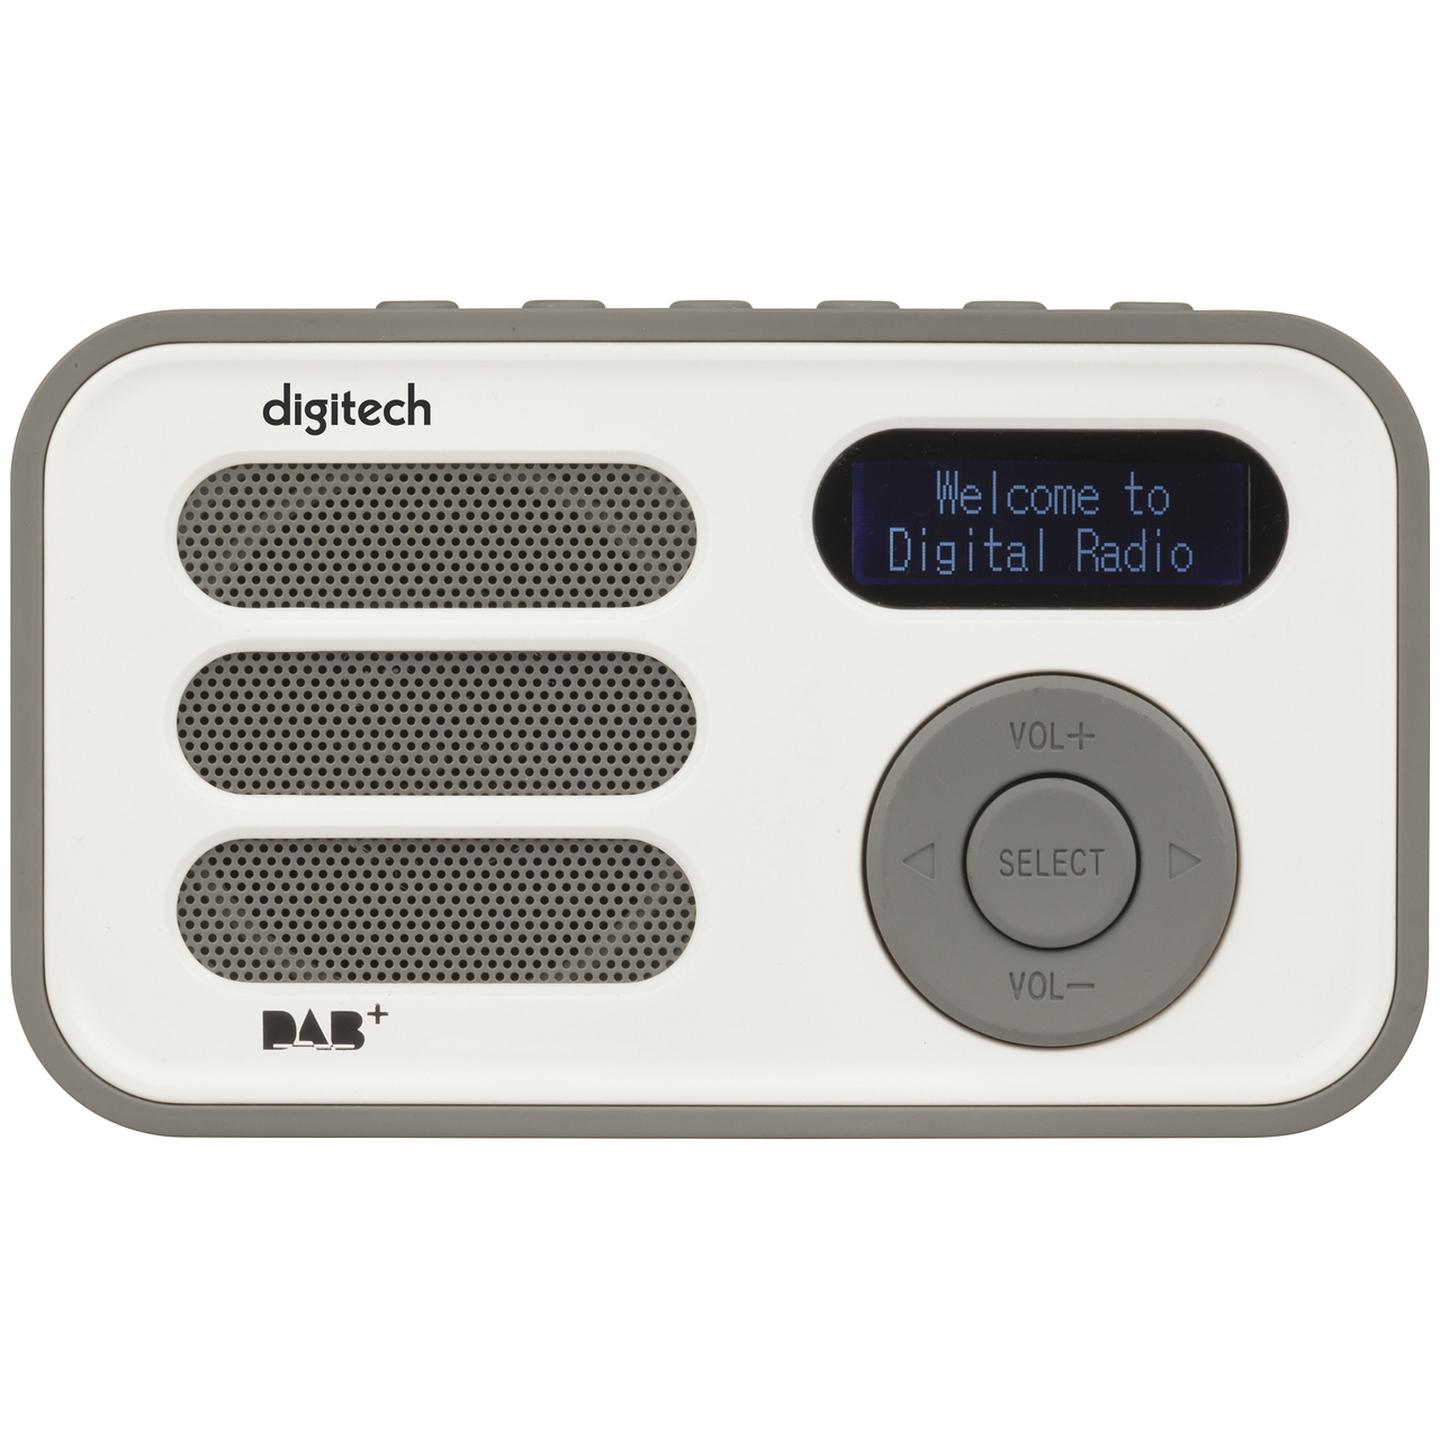 Digitech Portable DAB and FM Radio